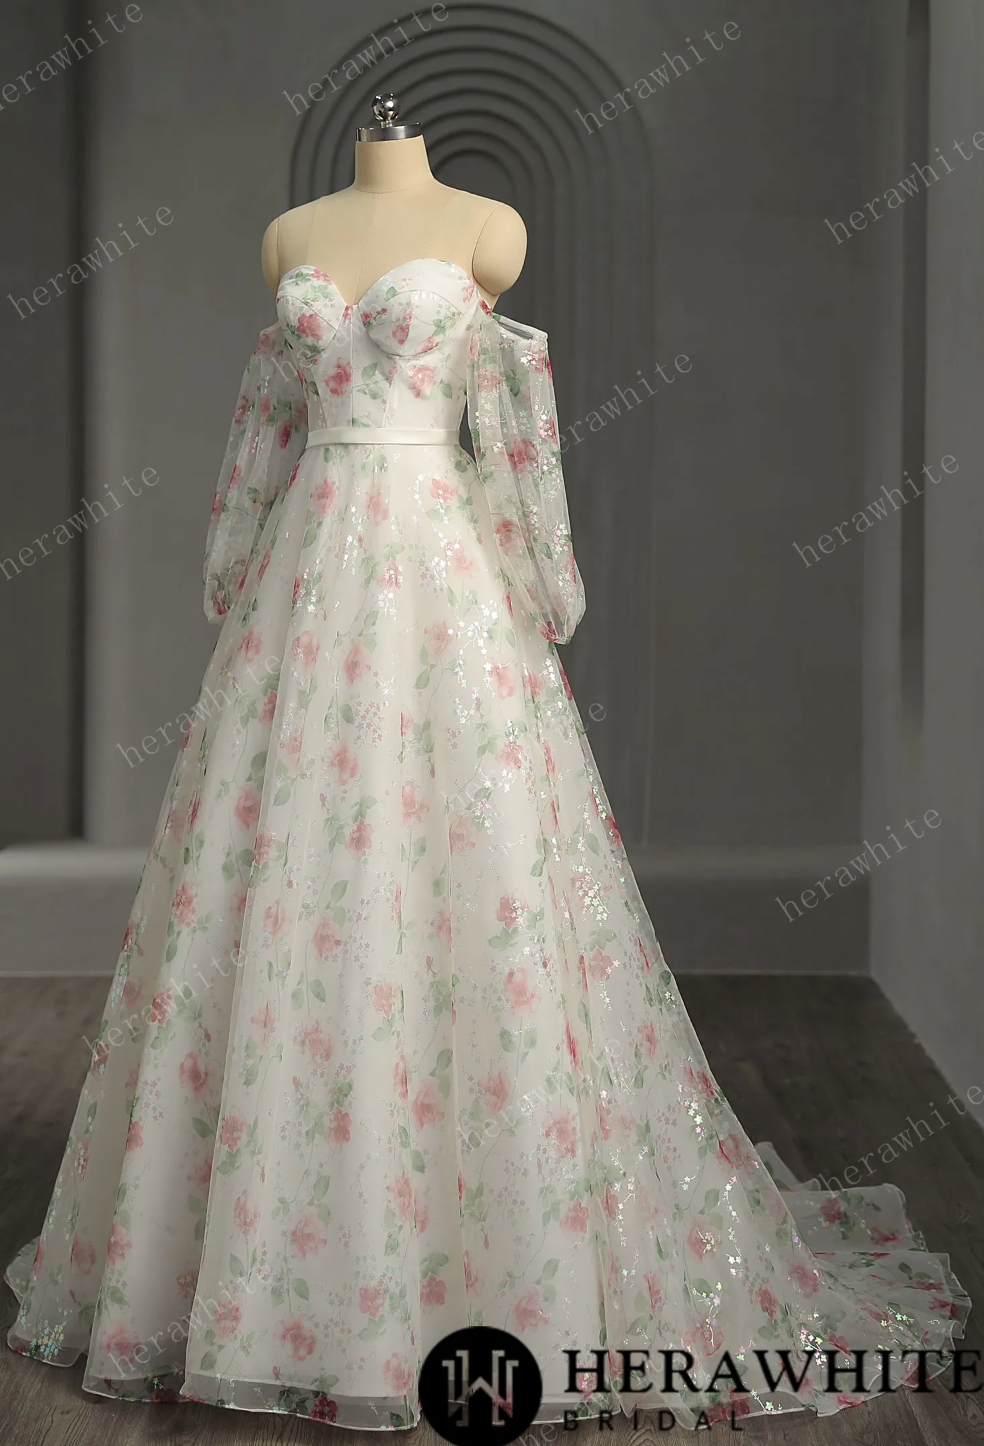 Romantic Print Sweetheart Neckline Wedding Dress With Detachable Sleeve